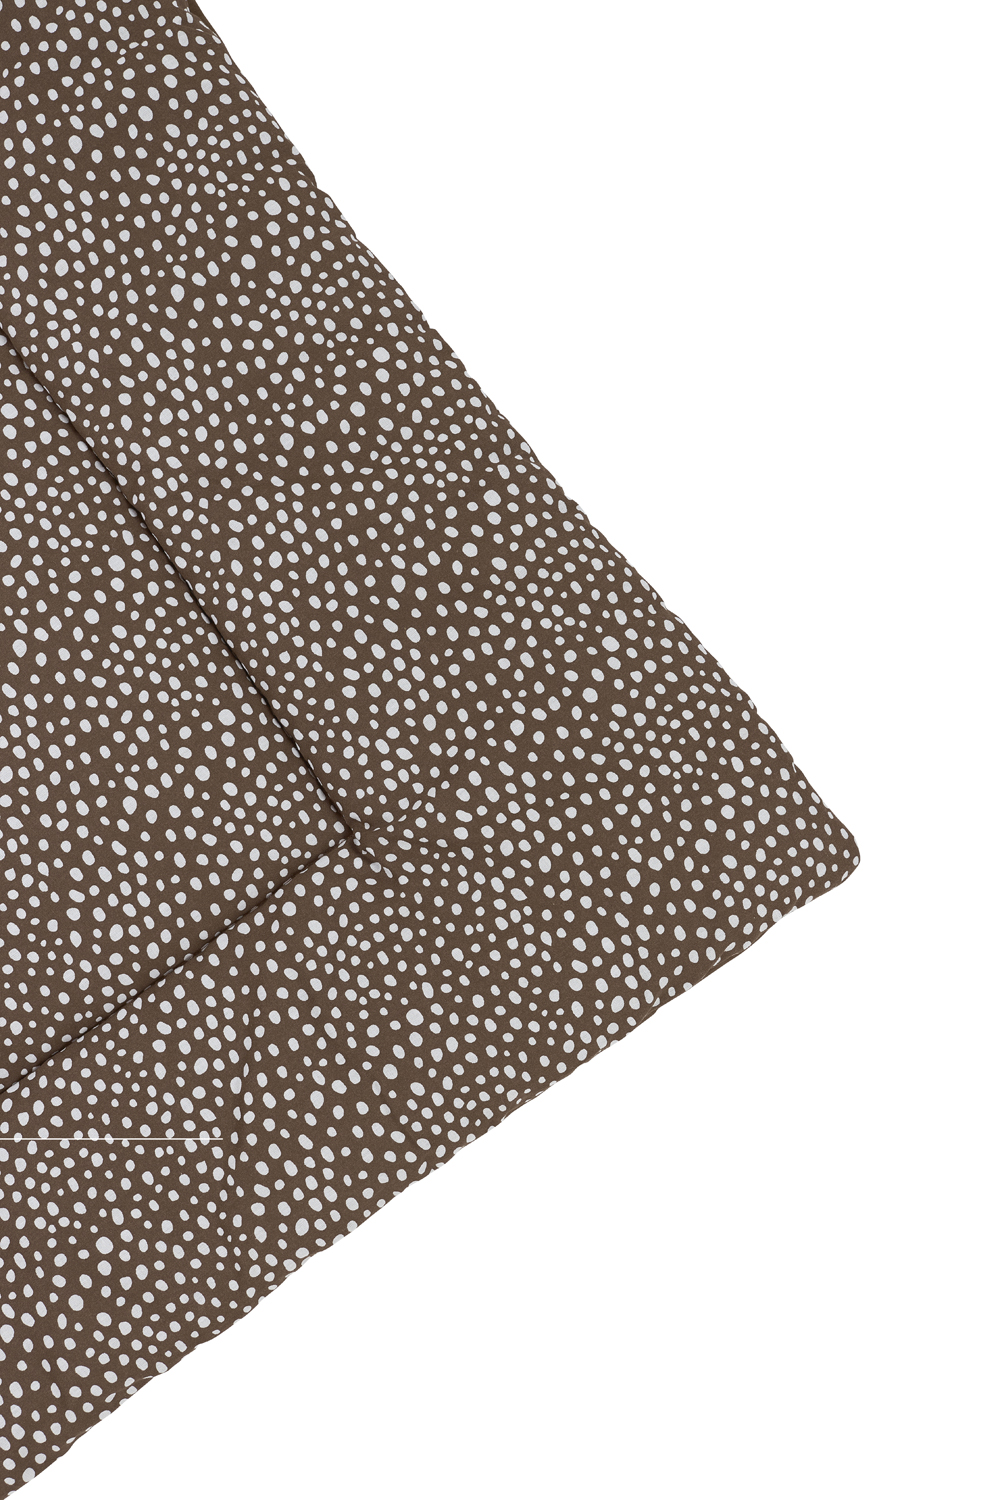 Boxkleed Cheetah/Uni - Chocolate - 80x100cm